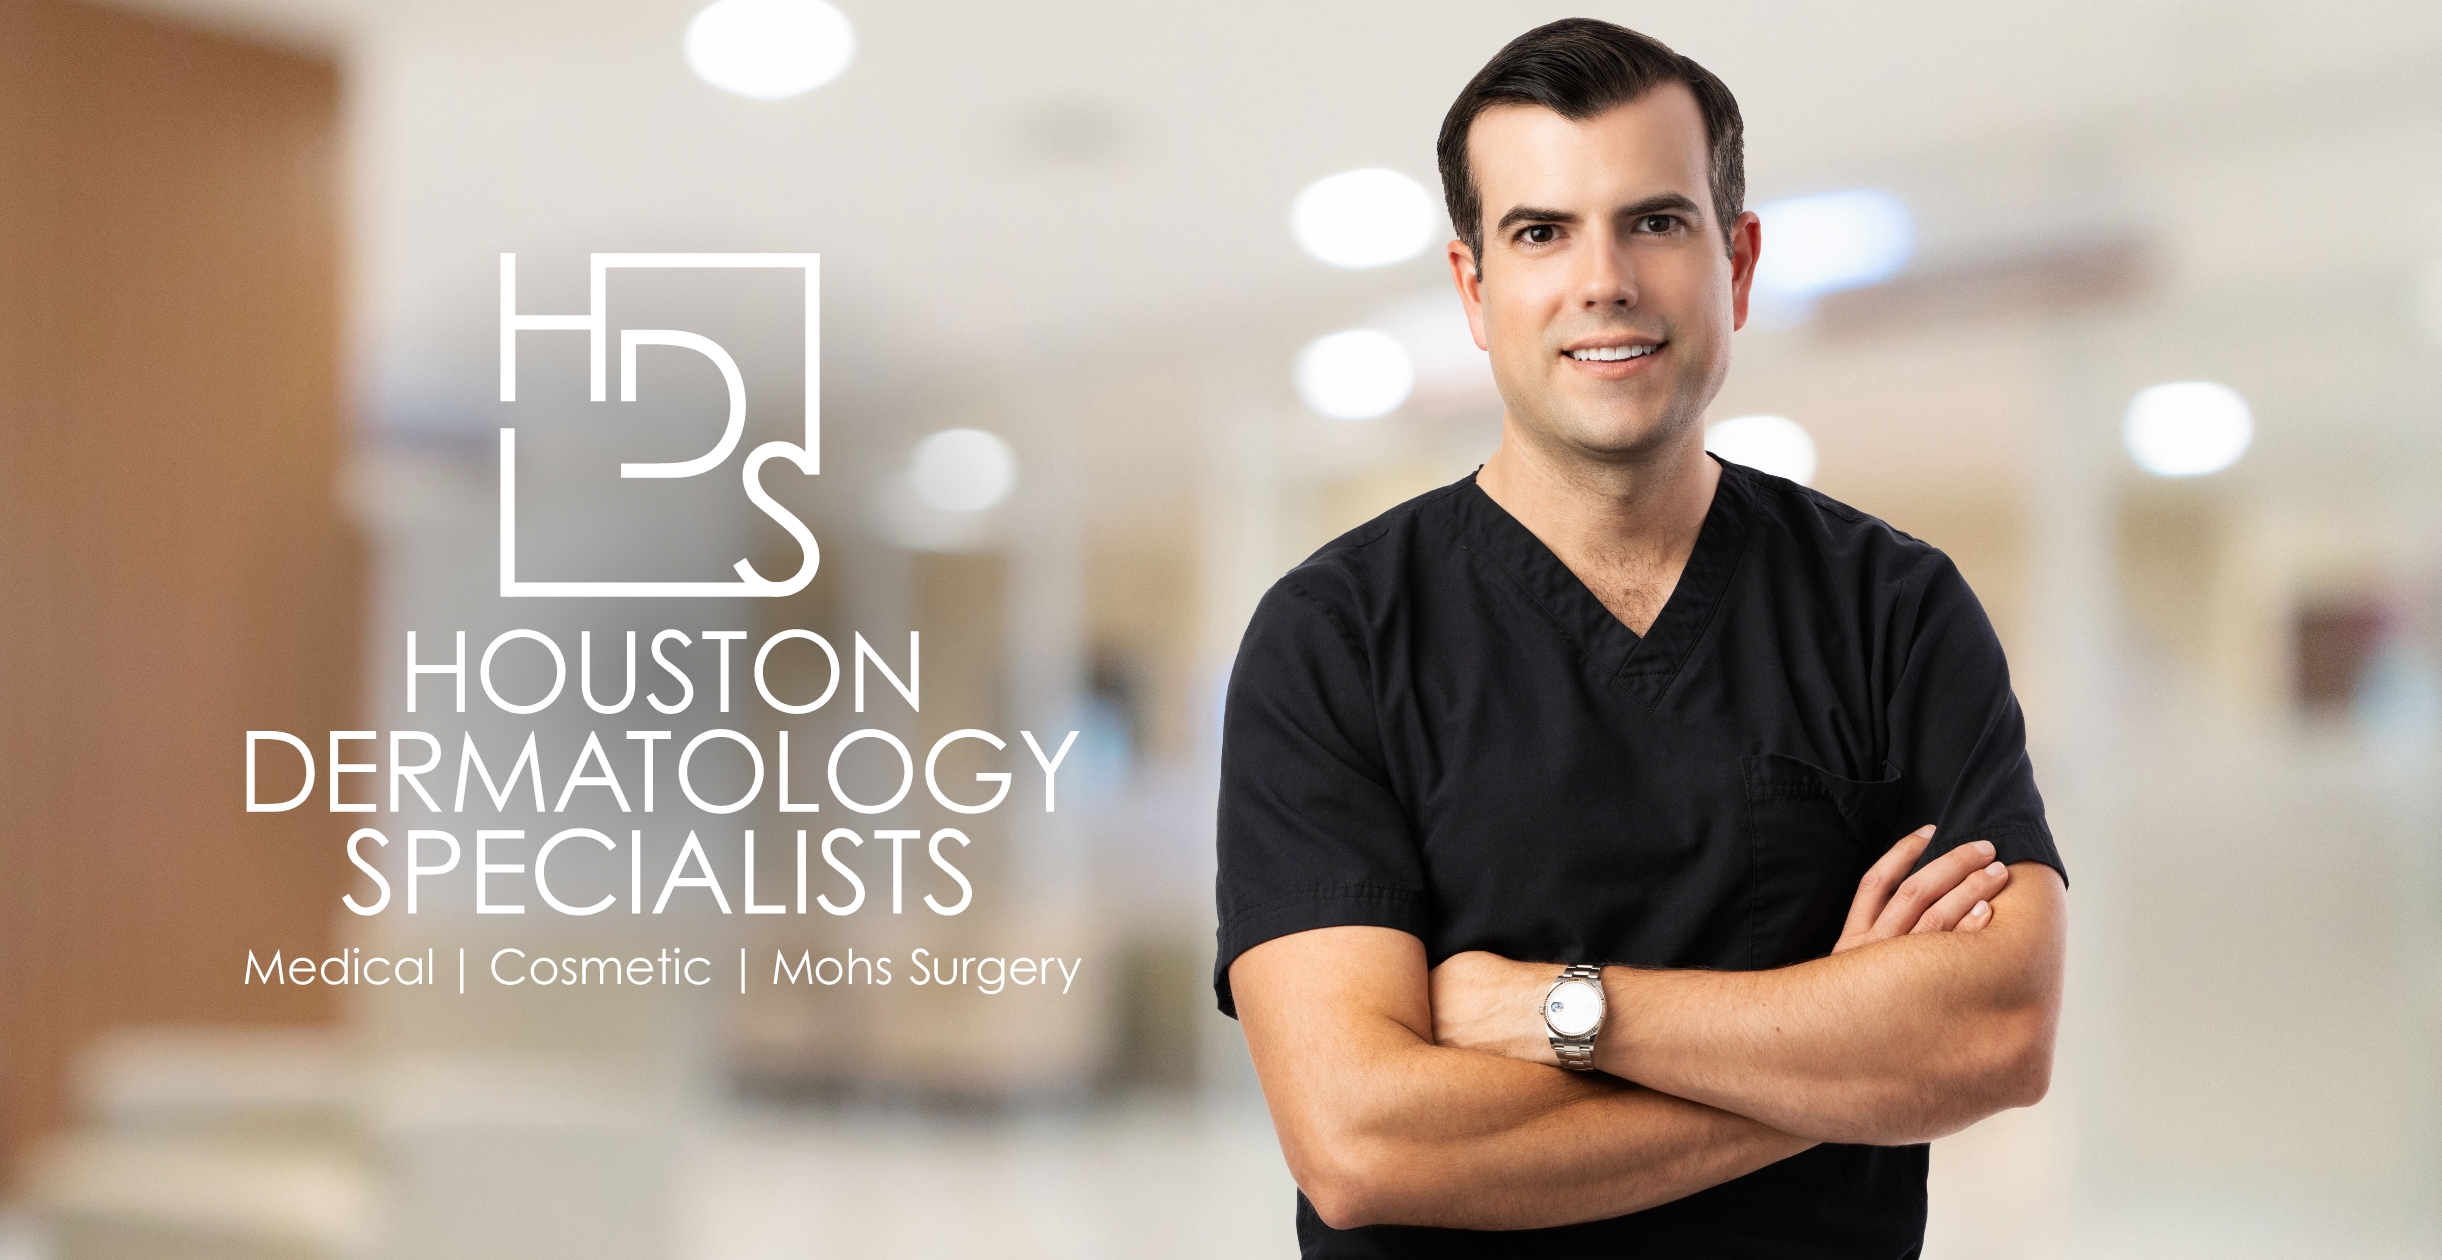 Houston Dermatology Specialists